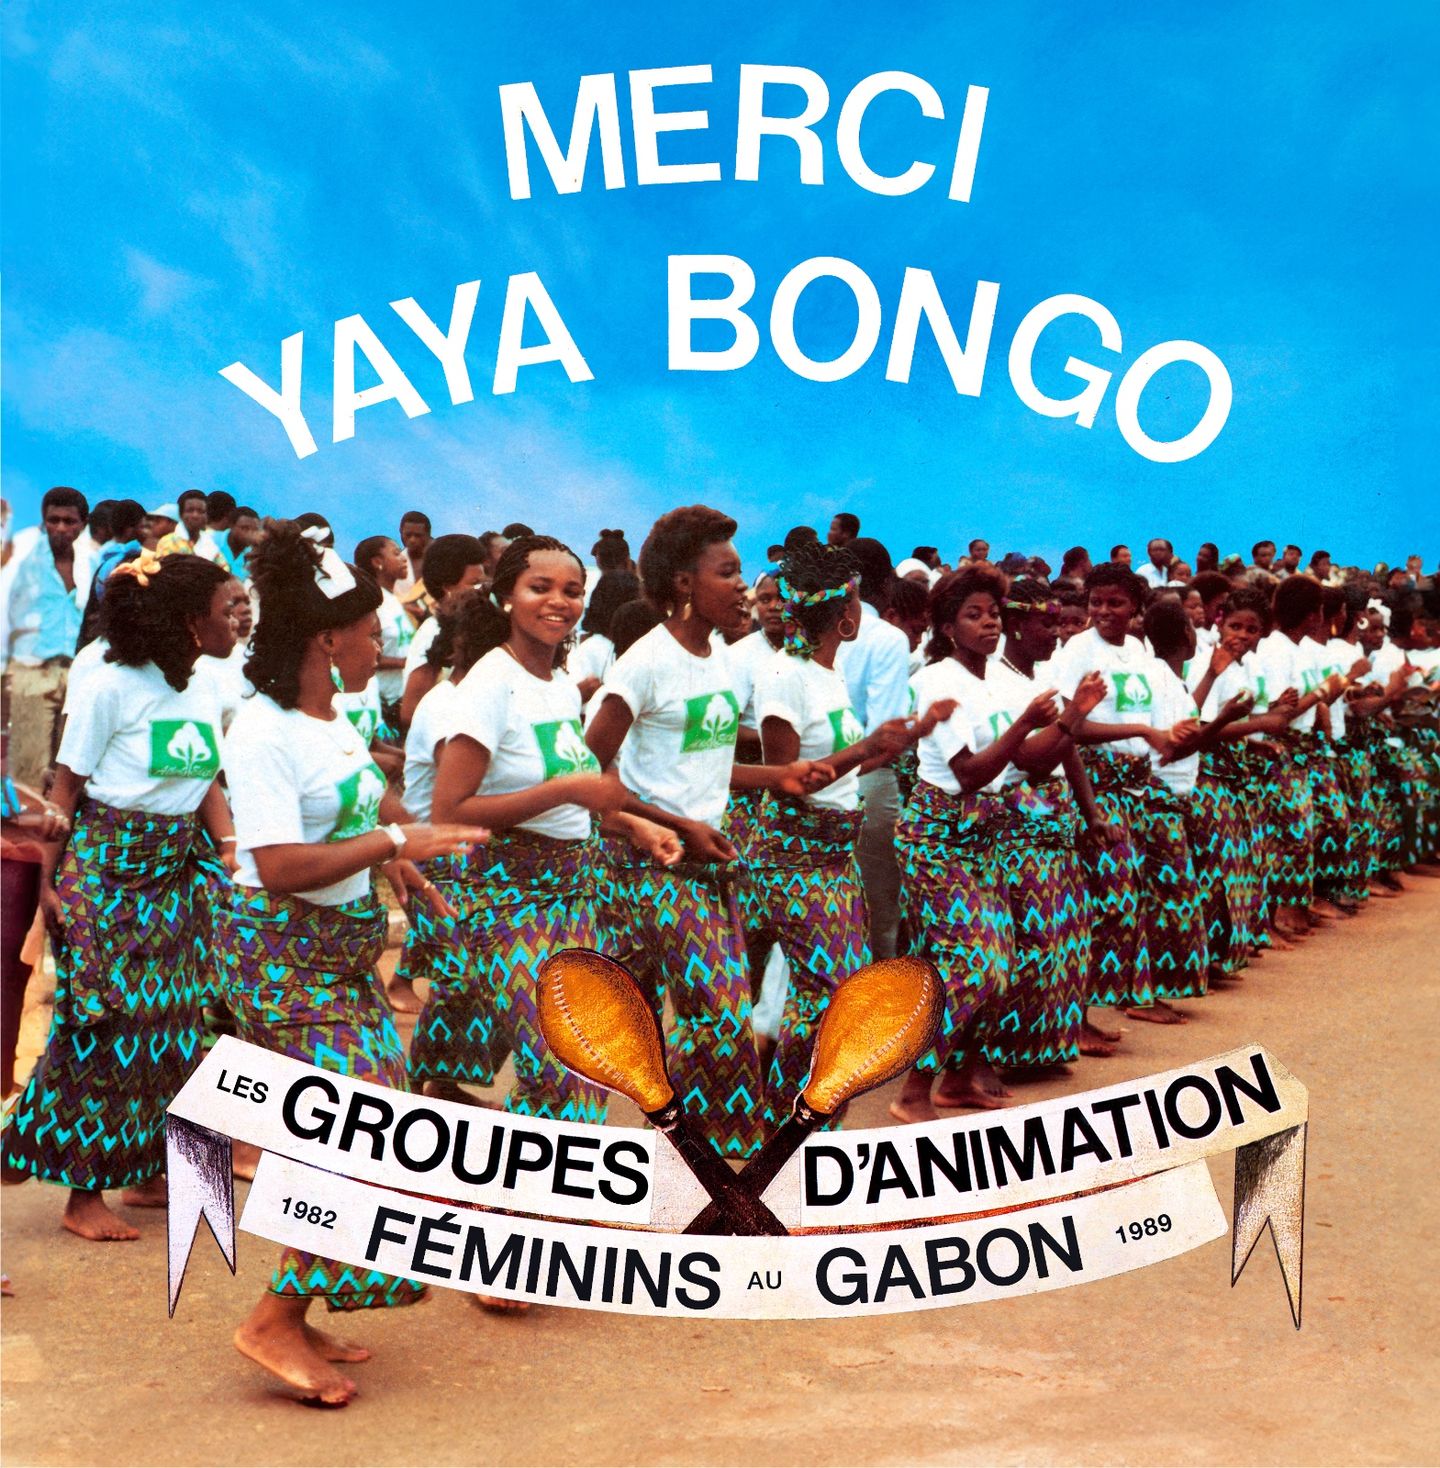 Merci Yaya Bongo - Female Animation Groups in Gabon 1982-1989